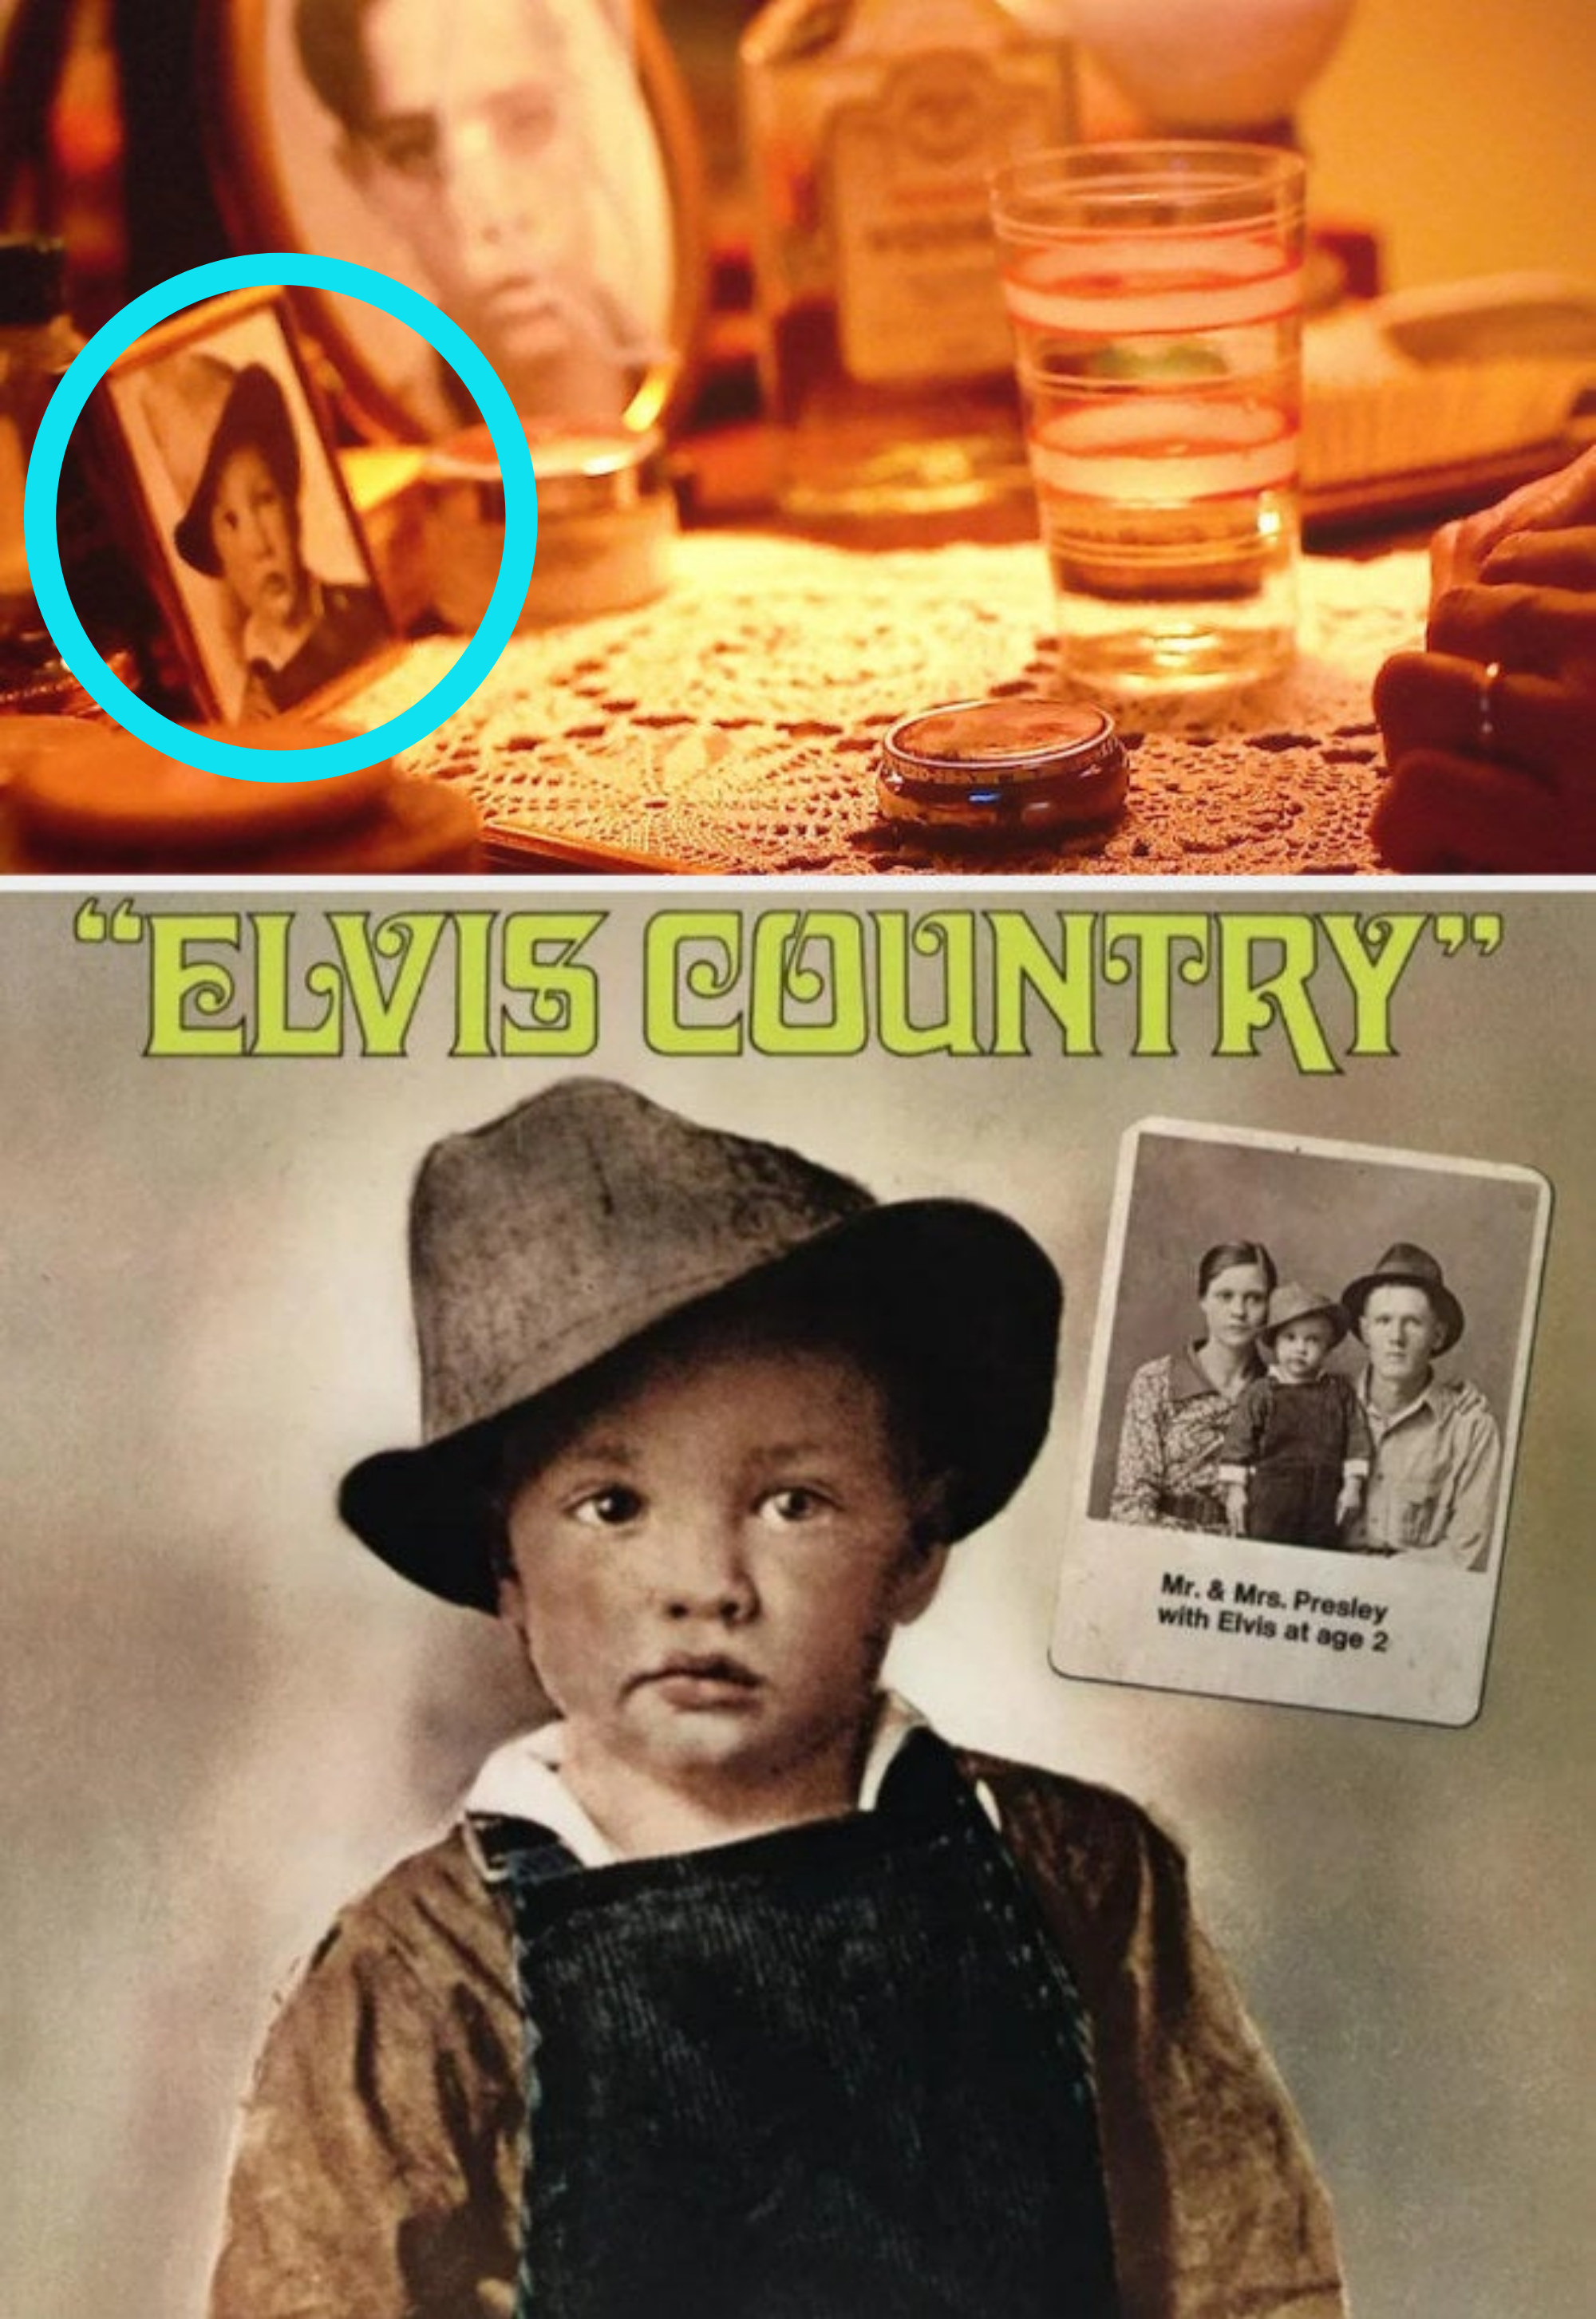 Picture of baby Elvis in &quot;Elvis&quot; vs. album cover for &quot;Elvis Country&quot;